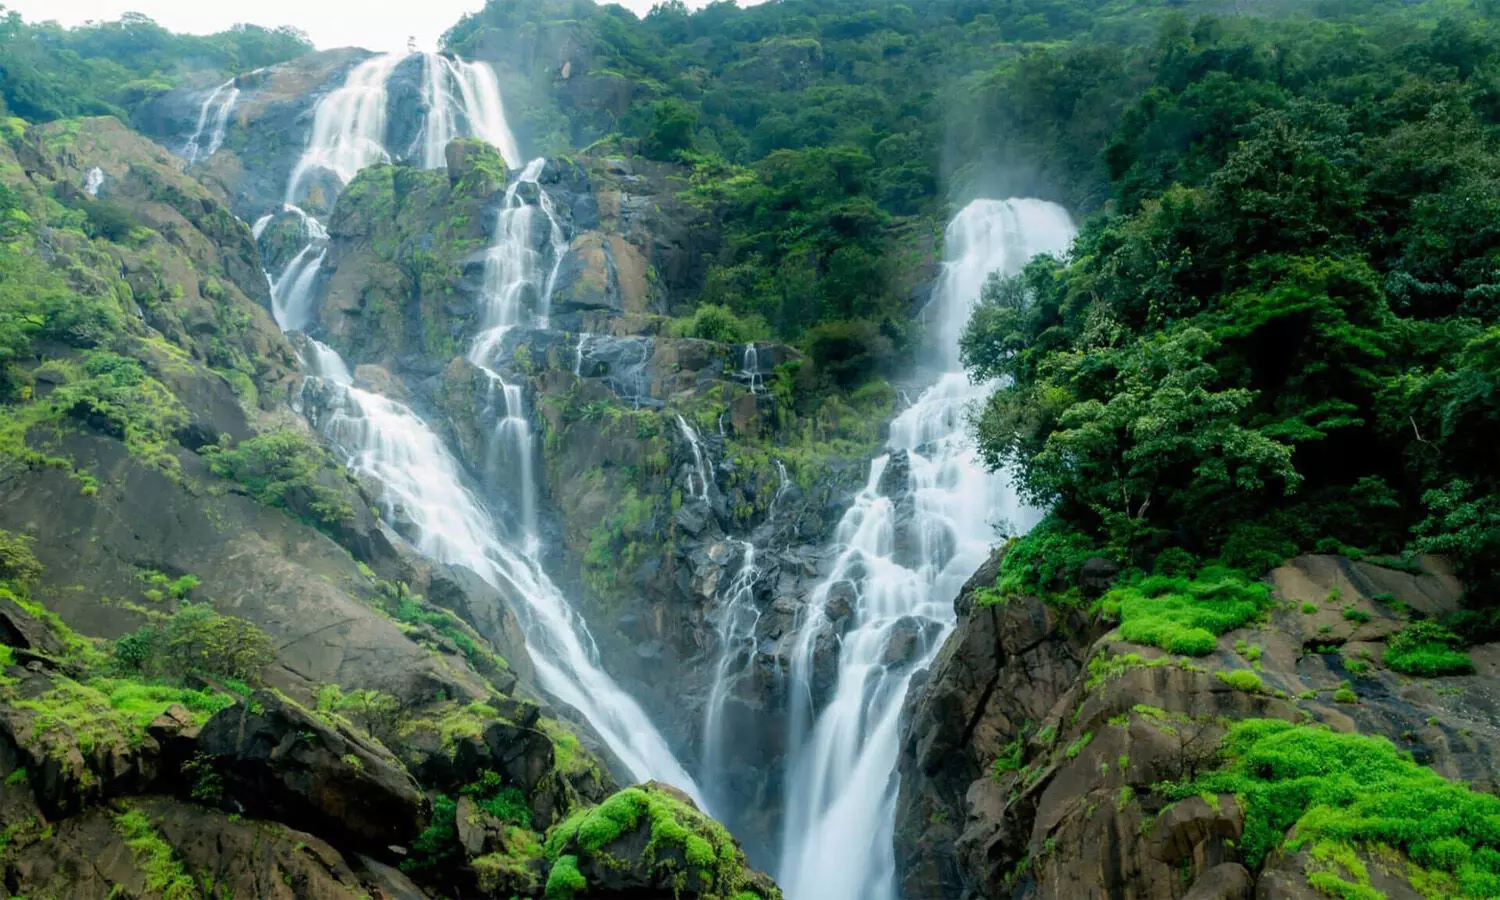 Dudhsagar falls in Goa